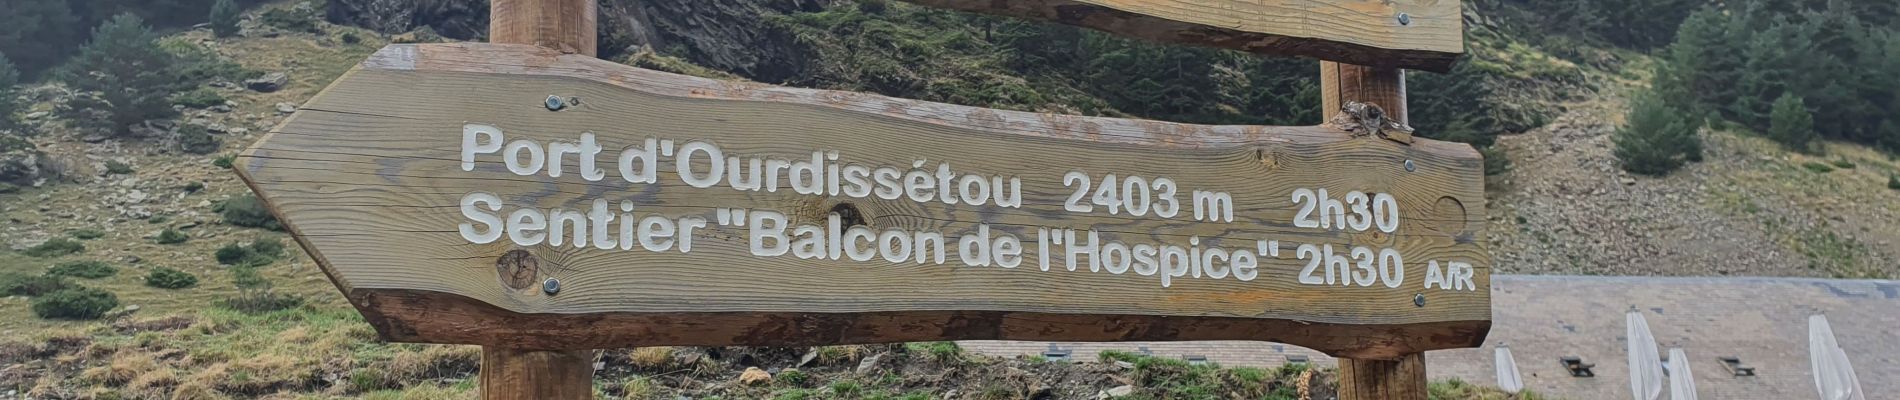 Trail Walking Saint-Lary-Soulan - Col d'ourdissetou boucle eco  - Photo